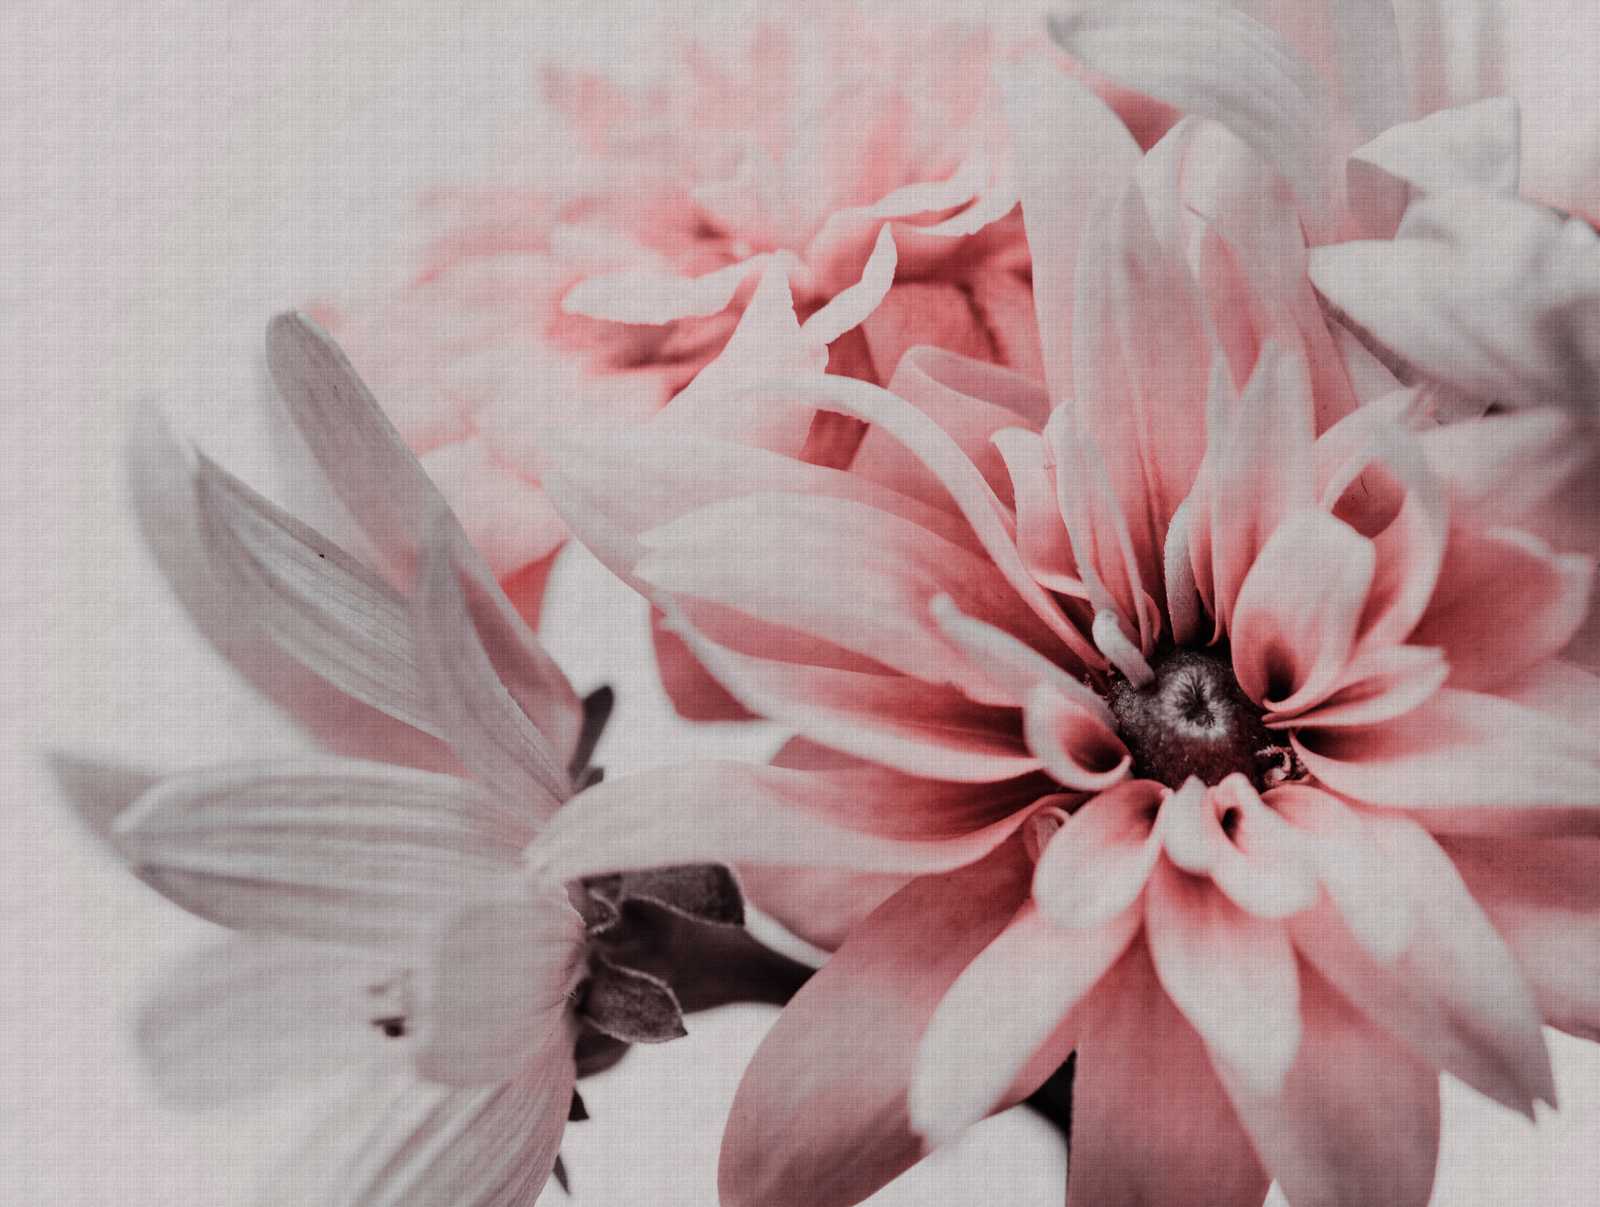             Papeles pintados novedad | motivo flores, XXL margaritas rosa suave
        